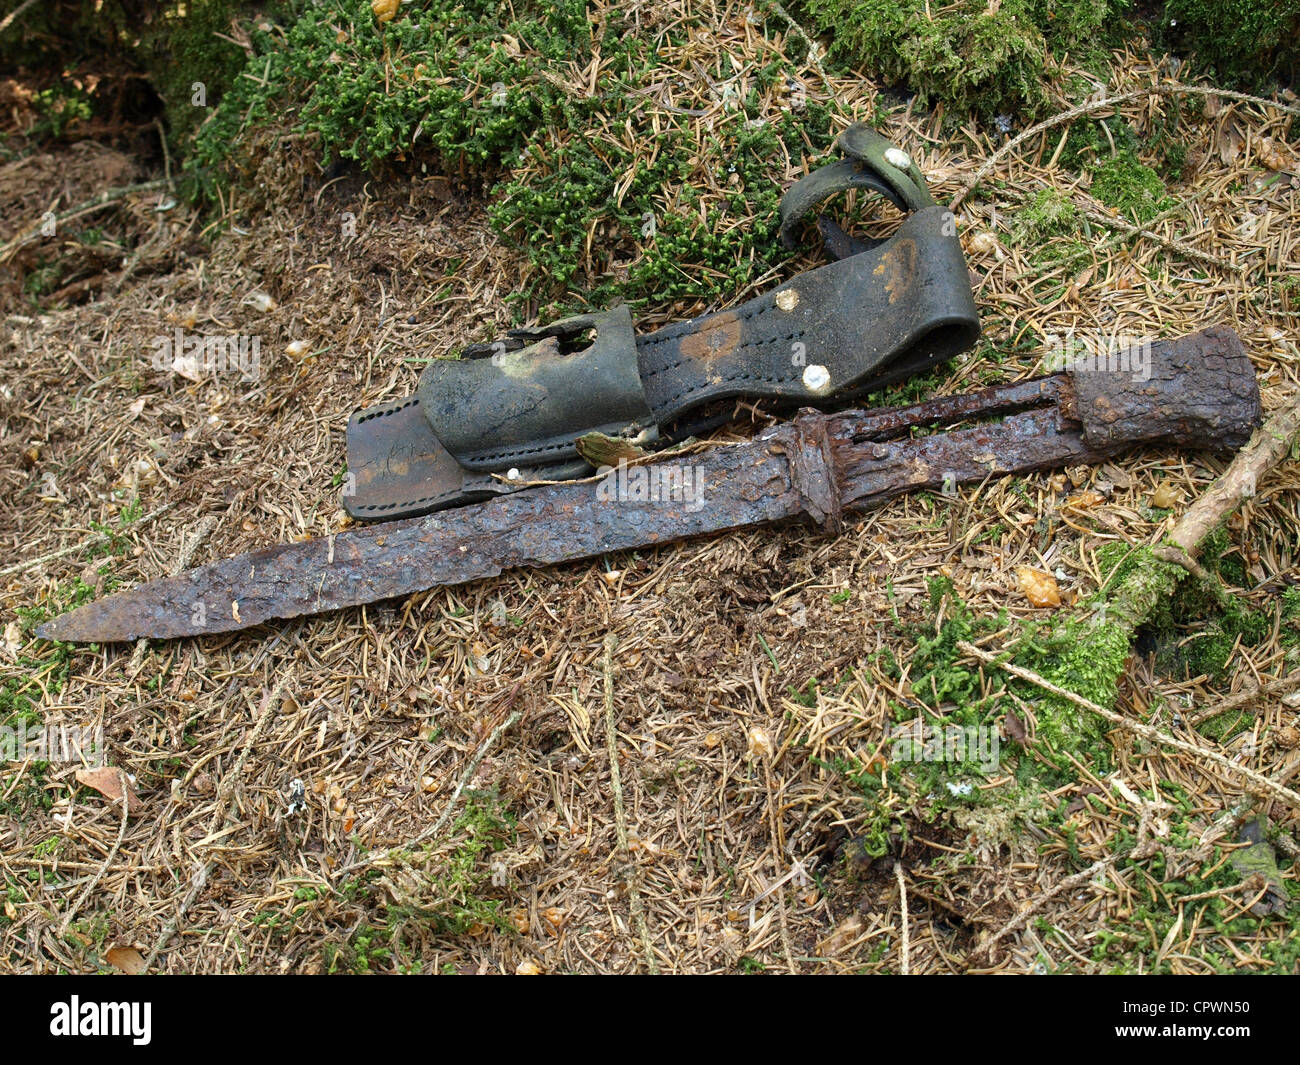 Bayoneta antigua / cuchilla y funda de la Segunda Guerra Mundial / altes bayoneta vom Zweiten Weltkrieg Foto de stock